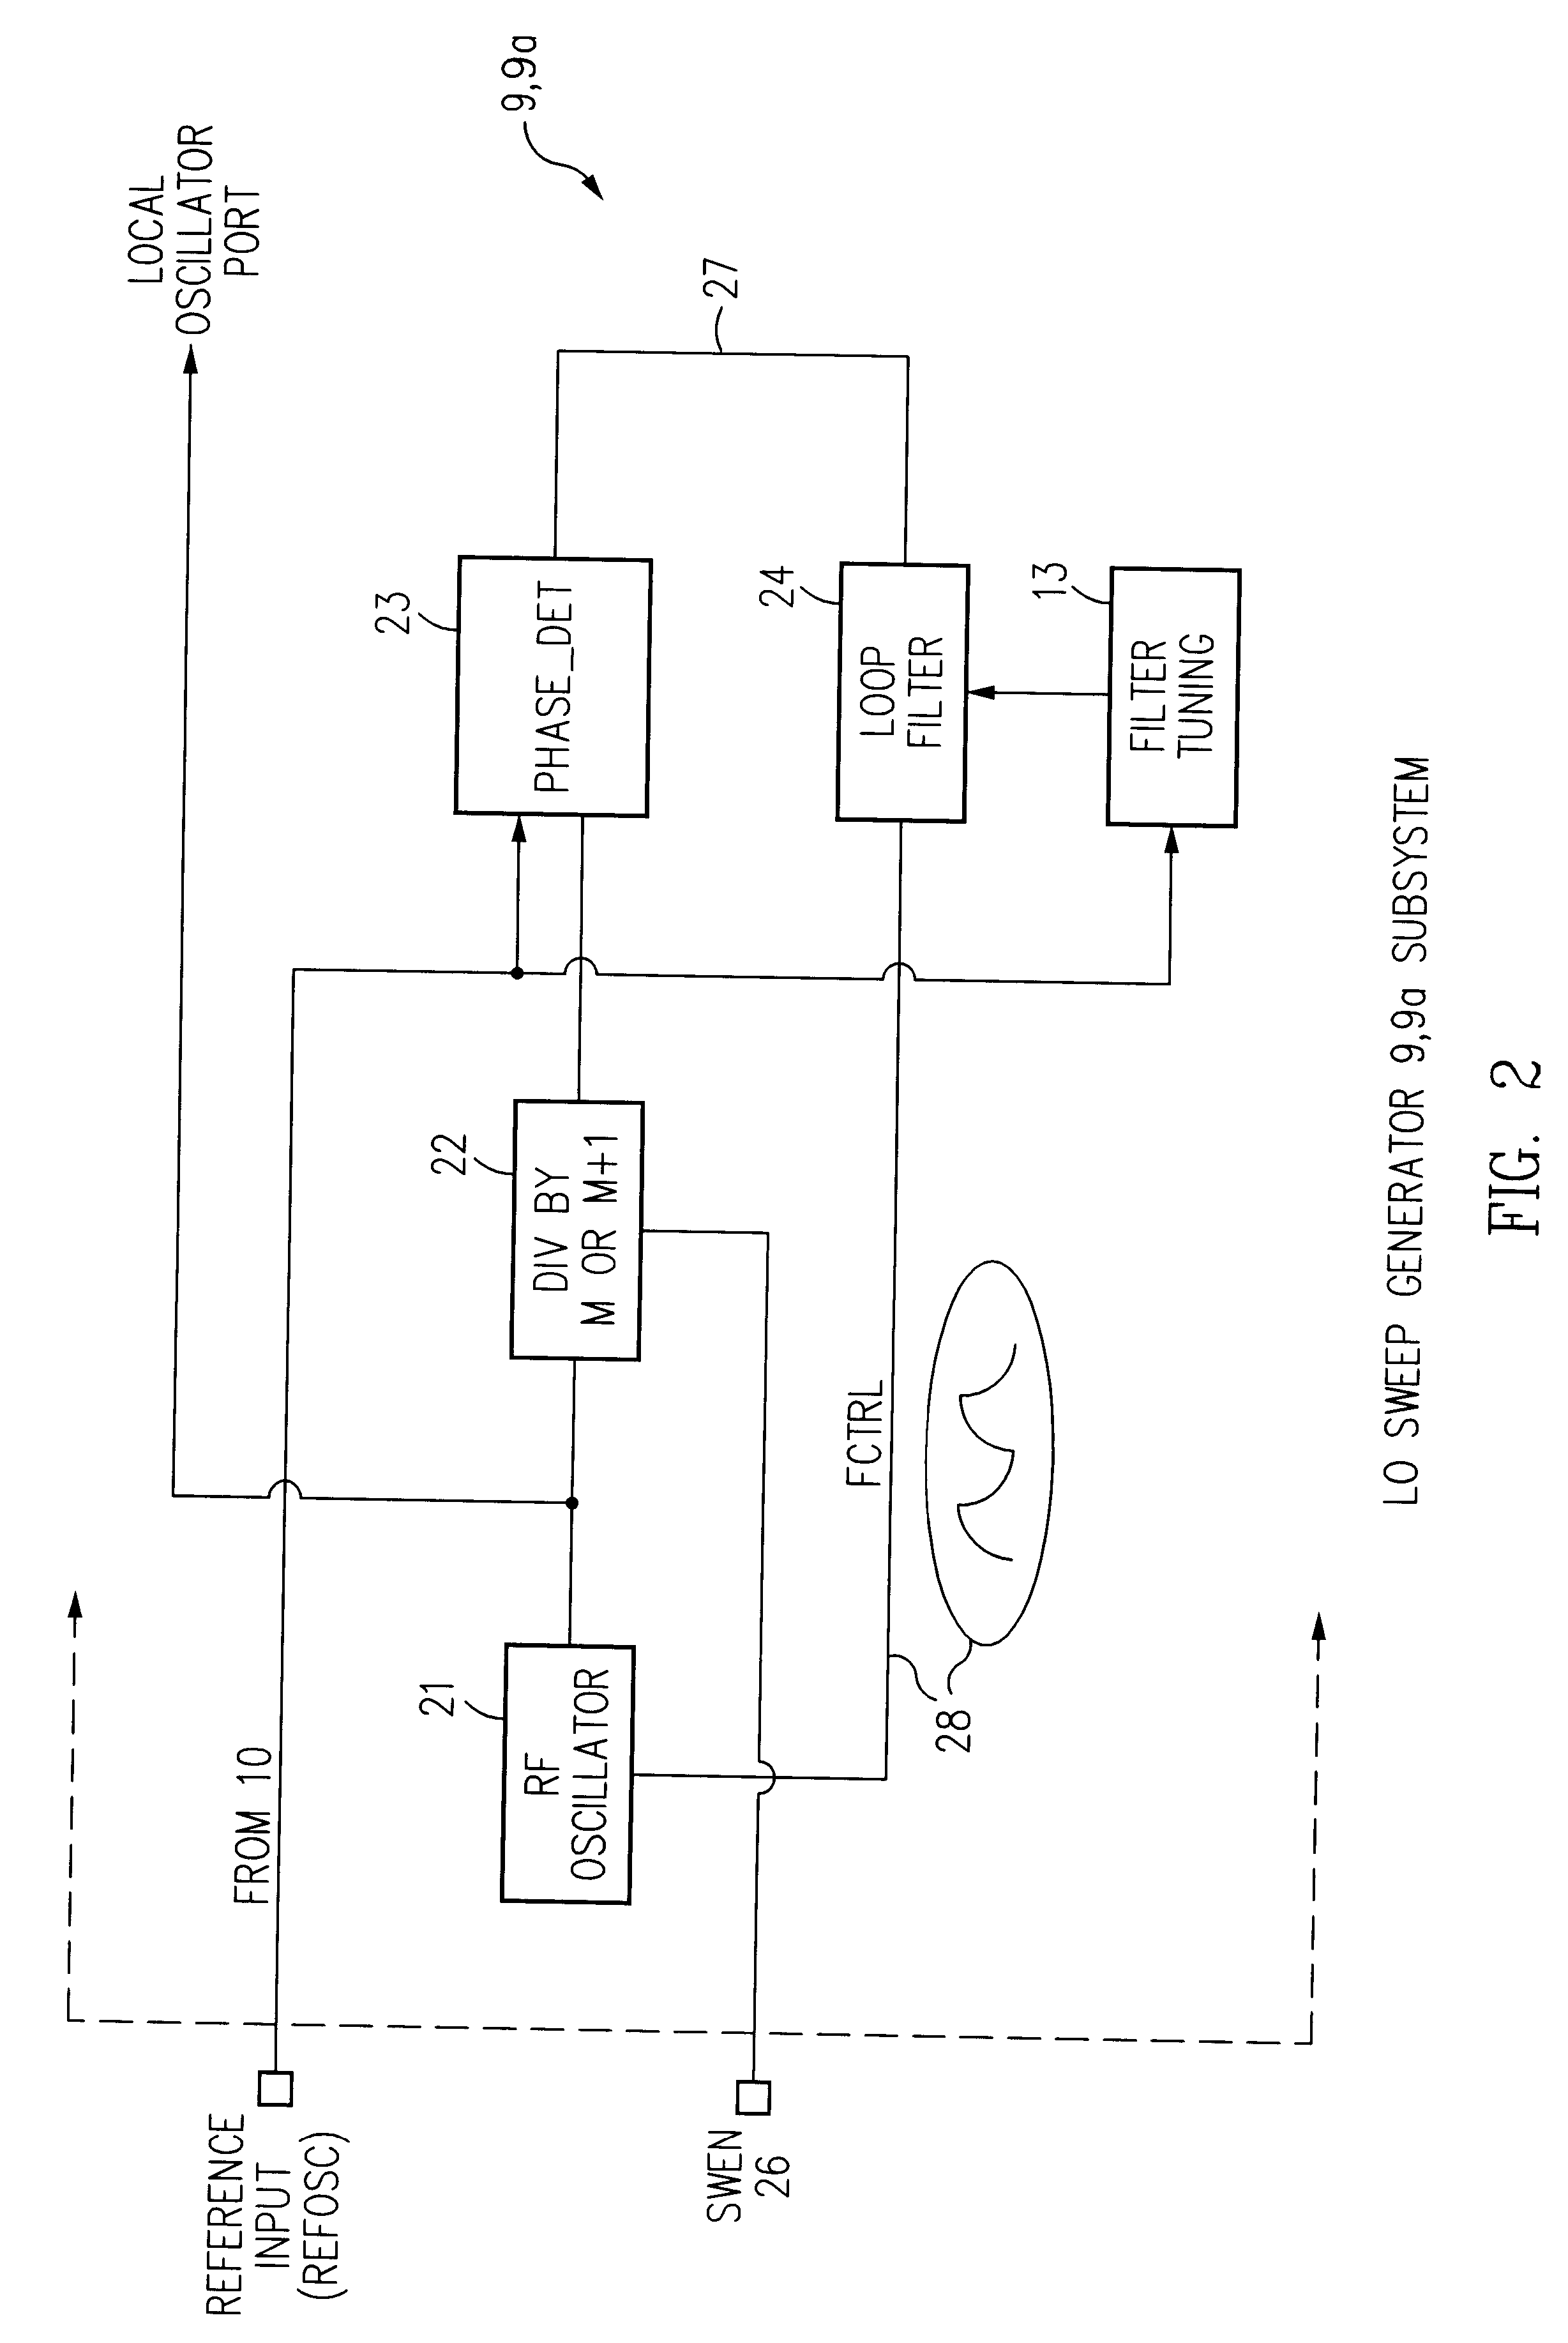 Bias signal generator in radio receiver